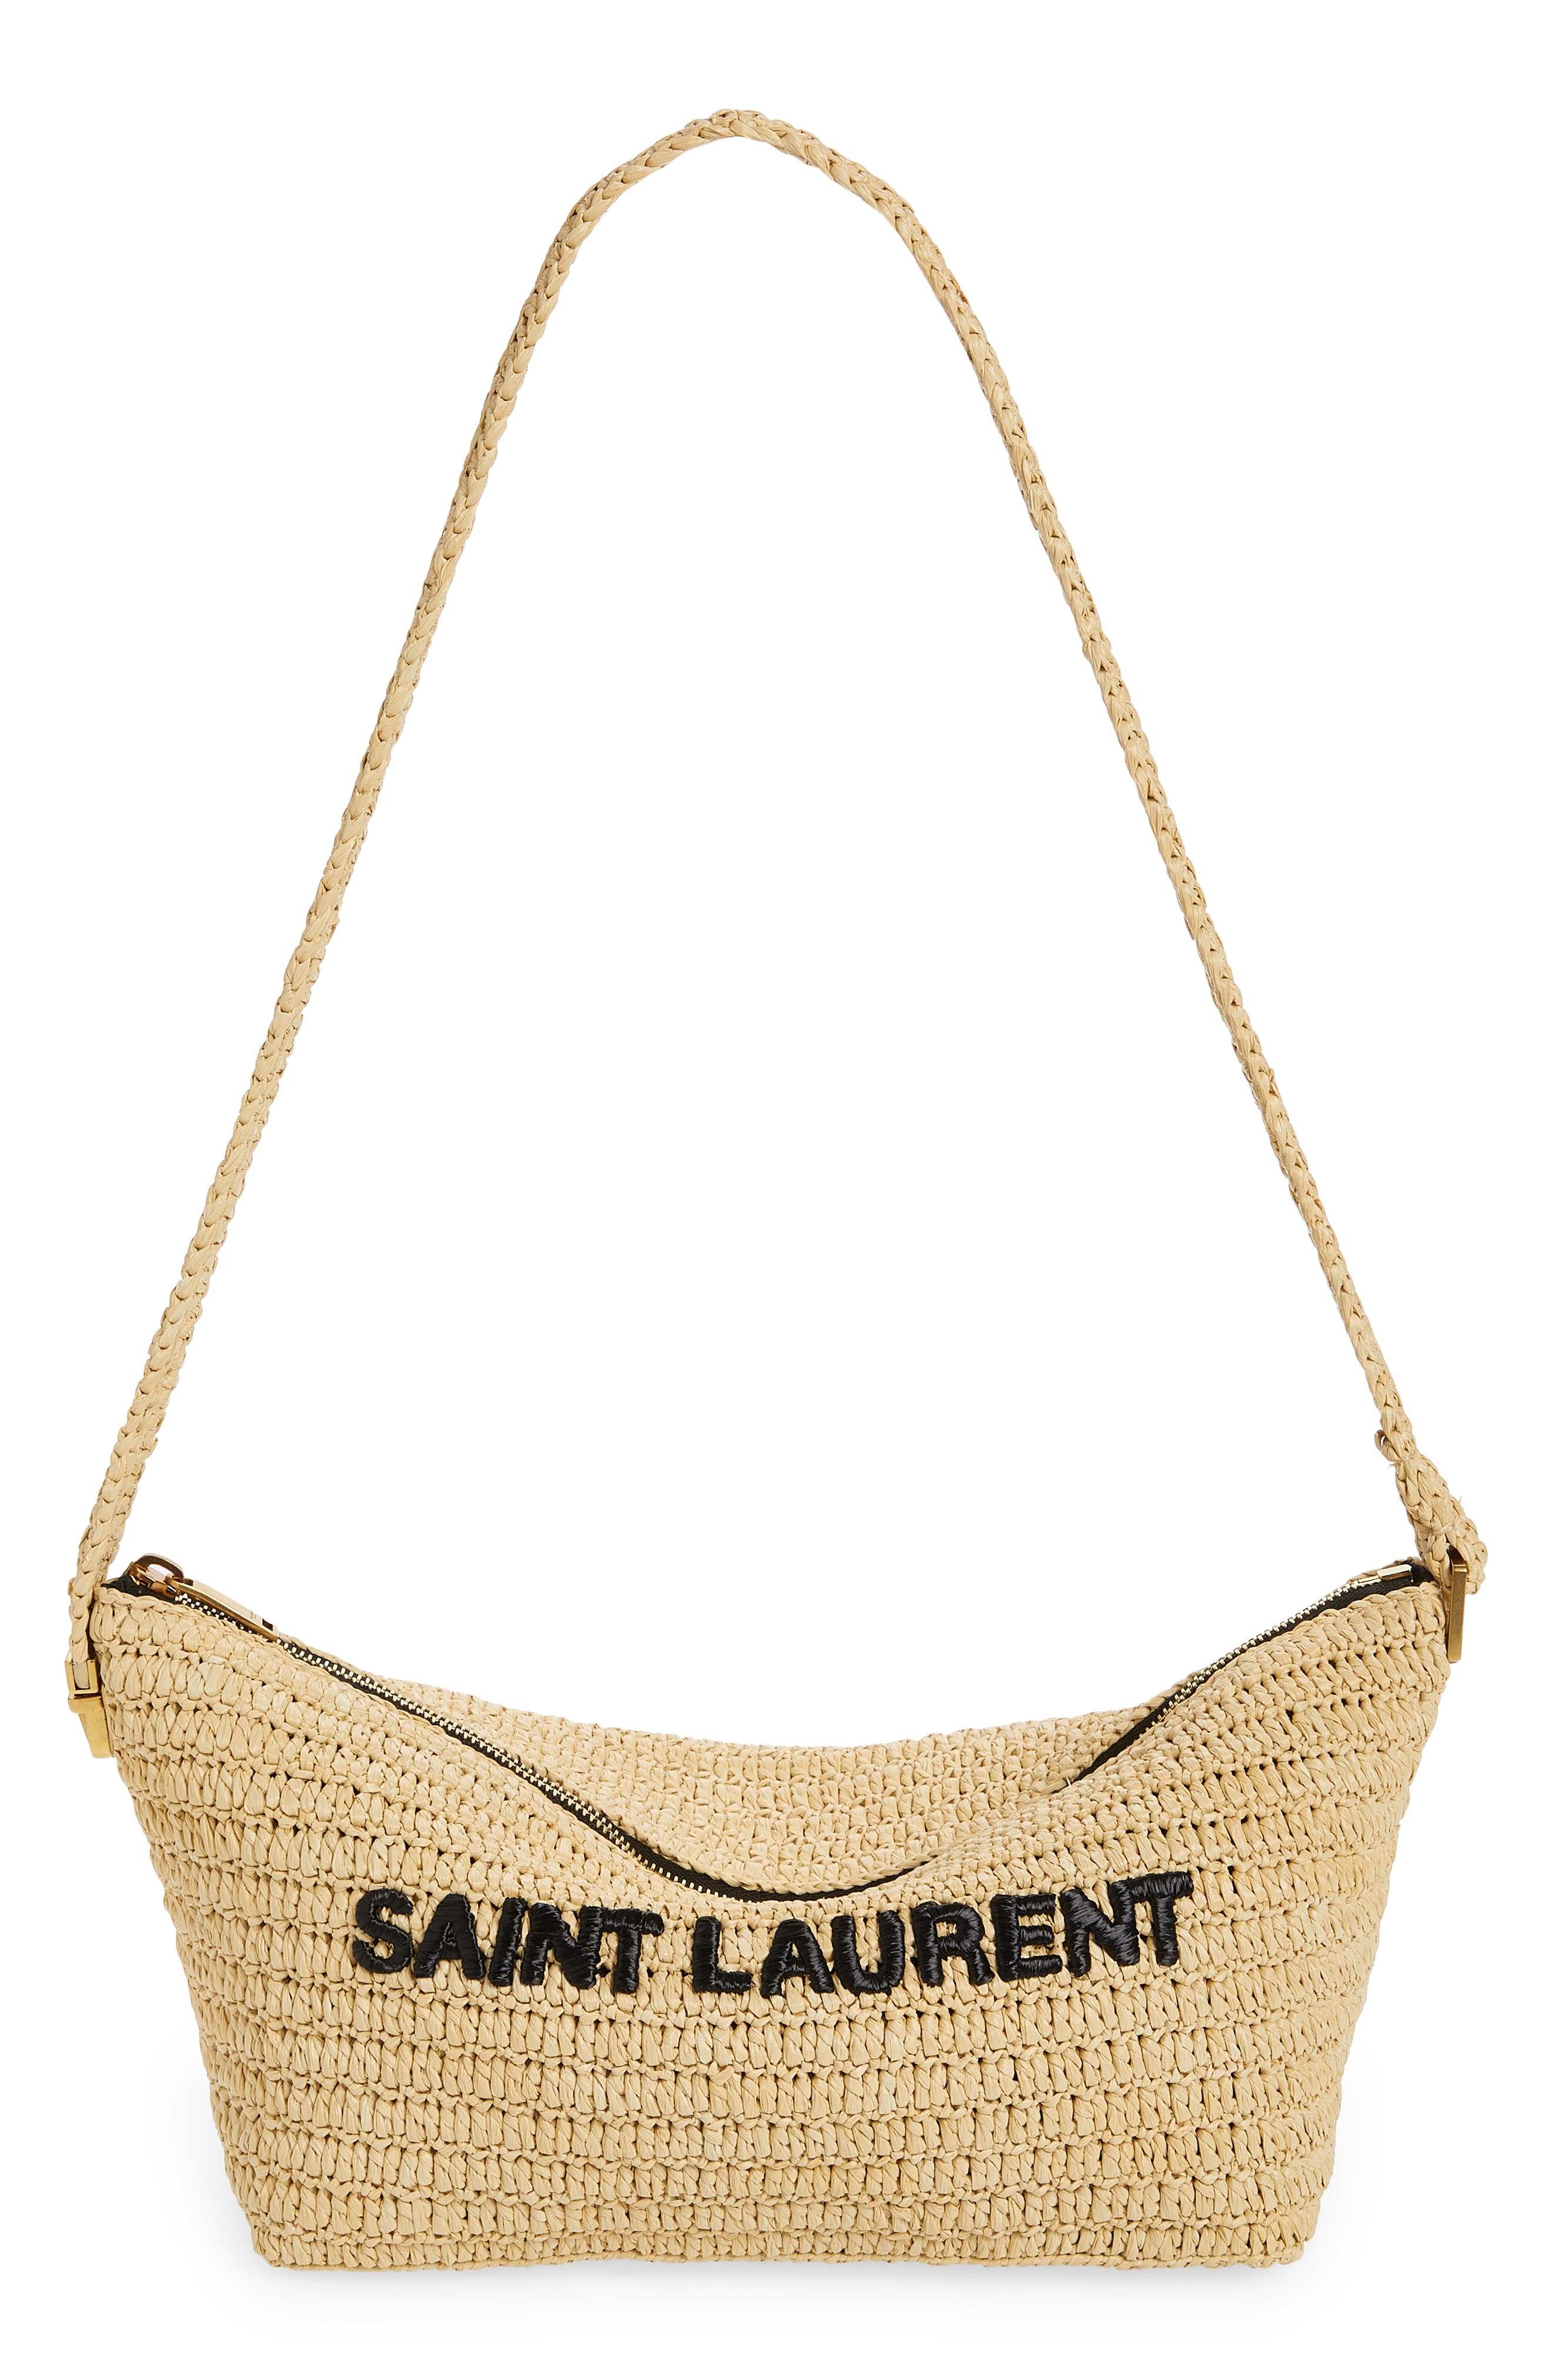 Saint Laurent Tuc Crocheted Shoulder Bag in Rafia